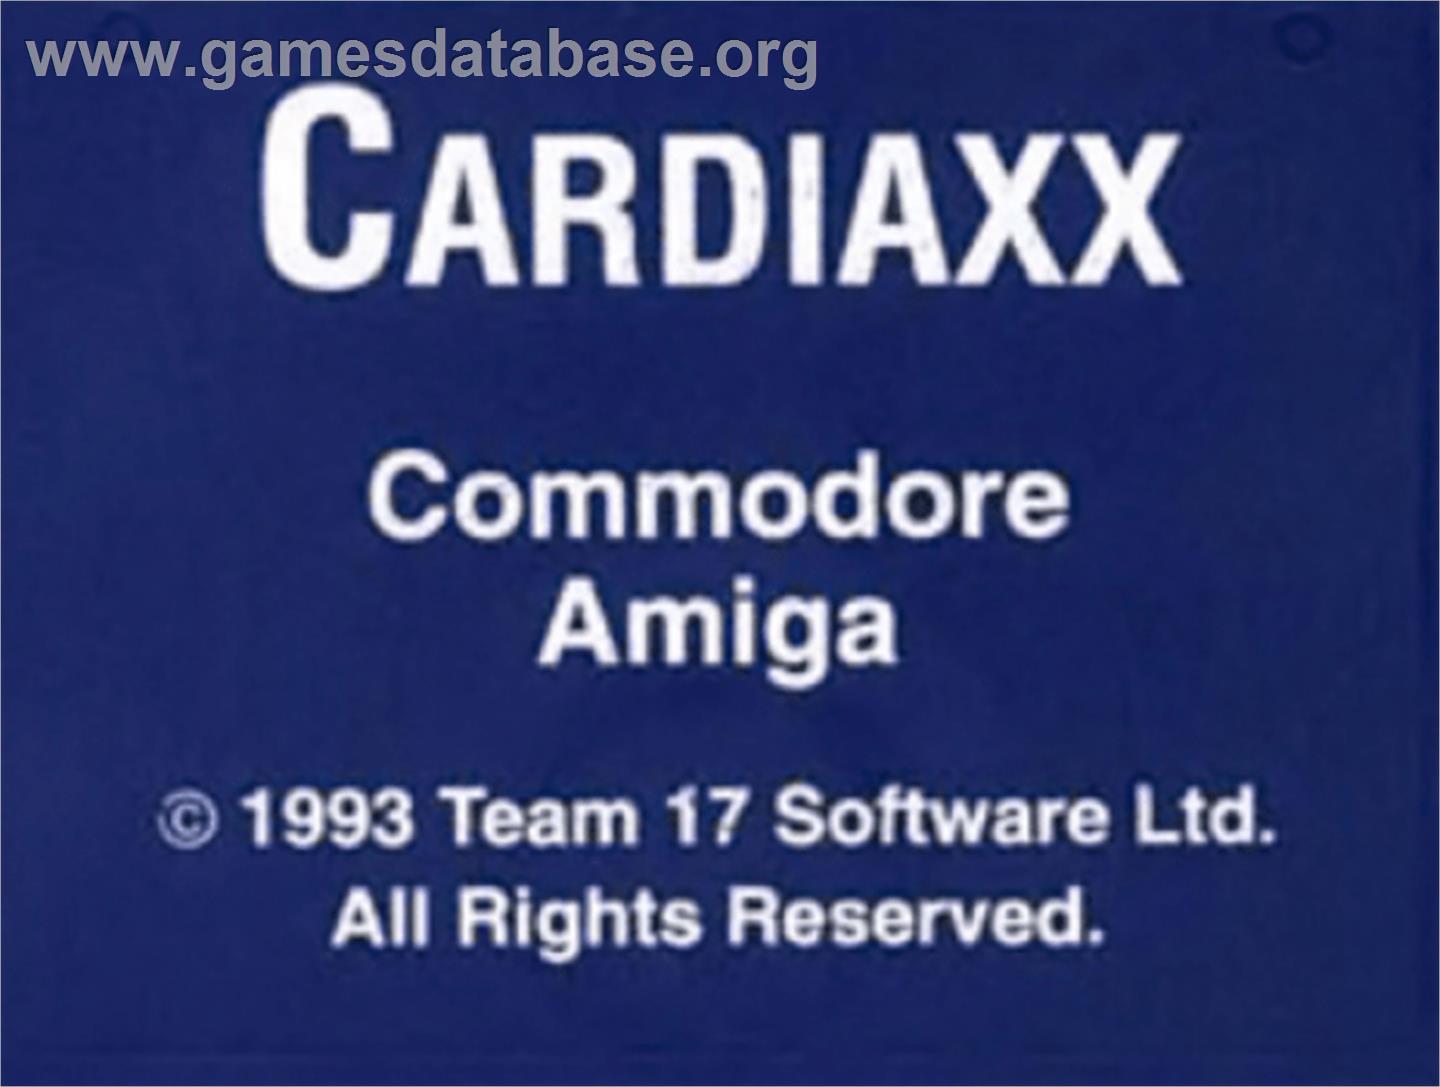 Cardiaxx - Commodore Amiga - Artwork - Cartridge Top